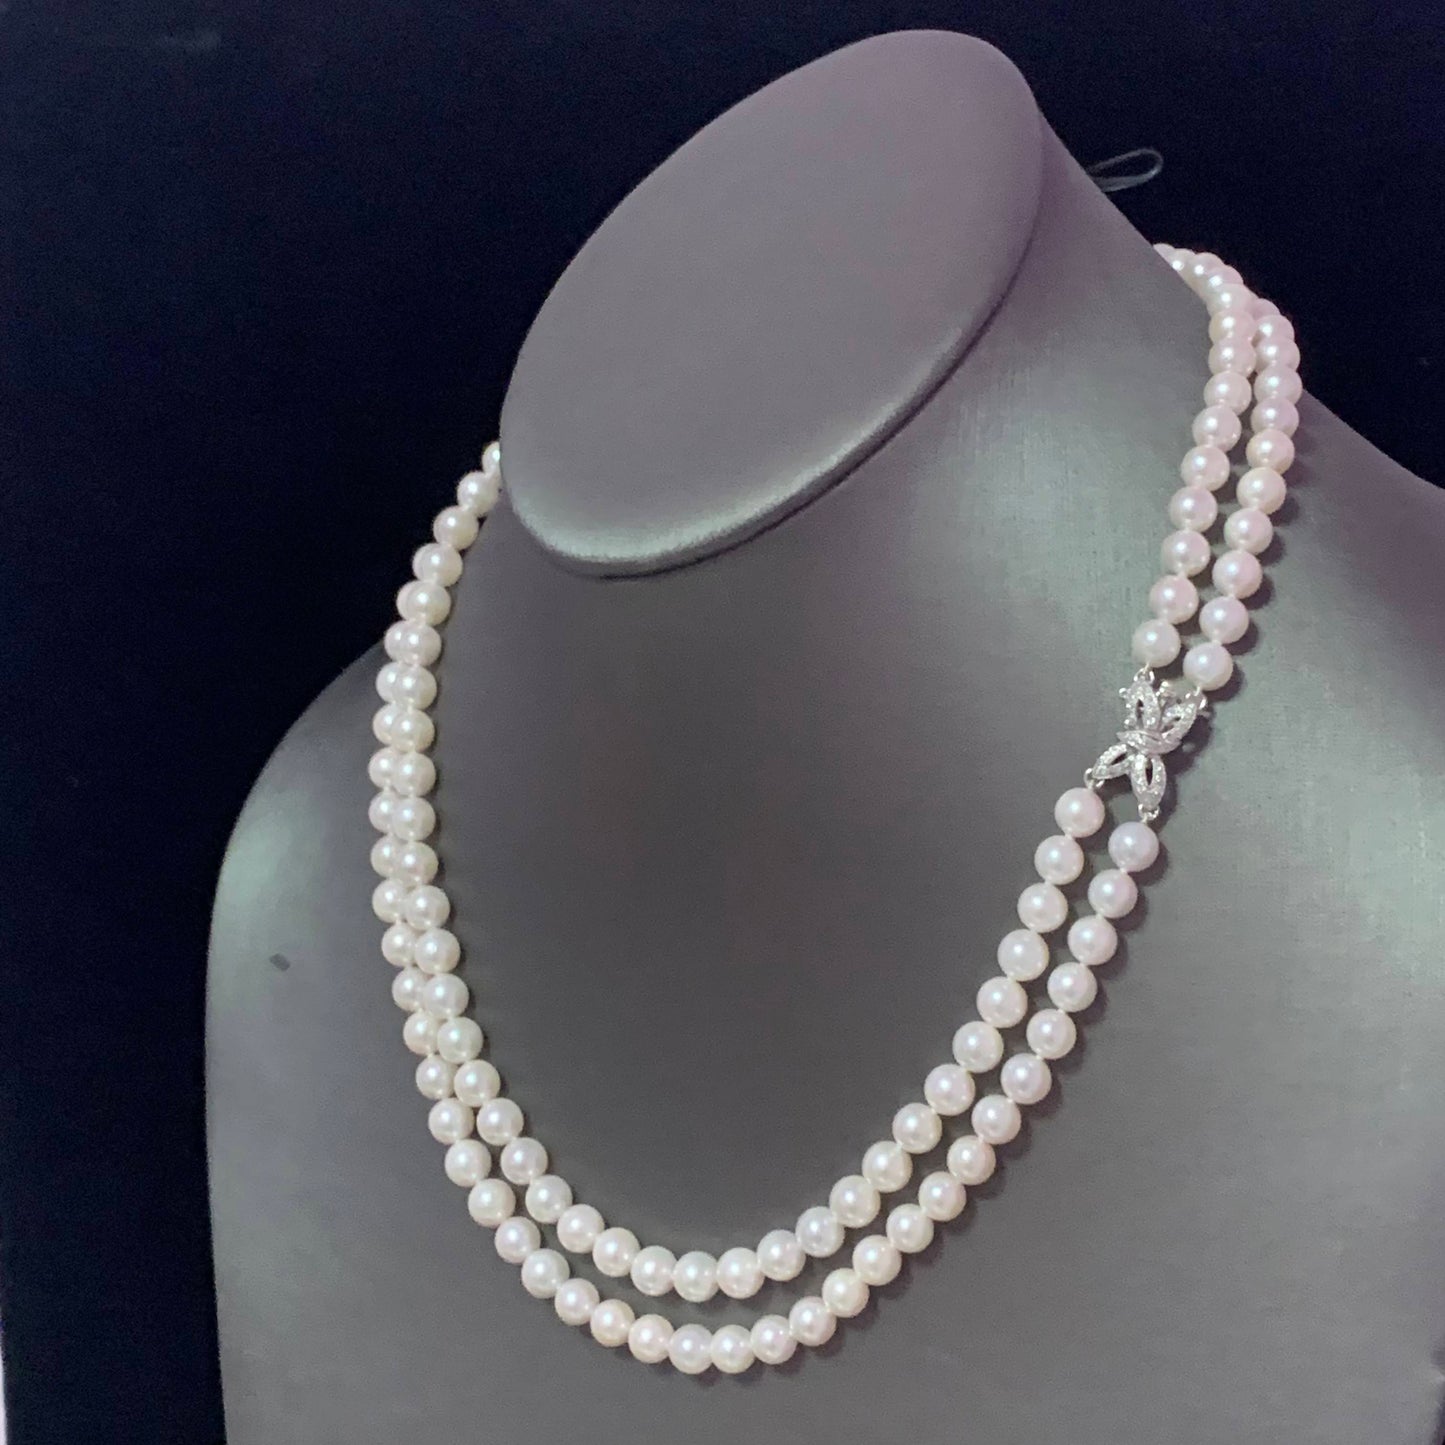 Diamond Akoya Pearl Necklace 18" 14k Gold 6.5 mm Certified $5,950 117515 - Certified Estate Jewelry